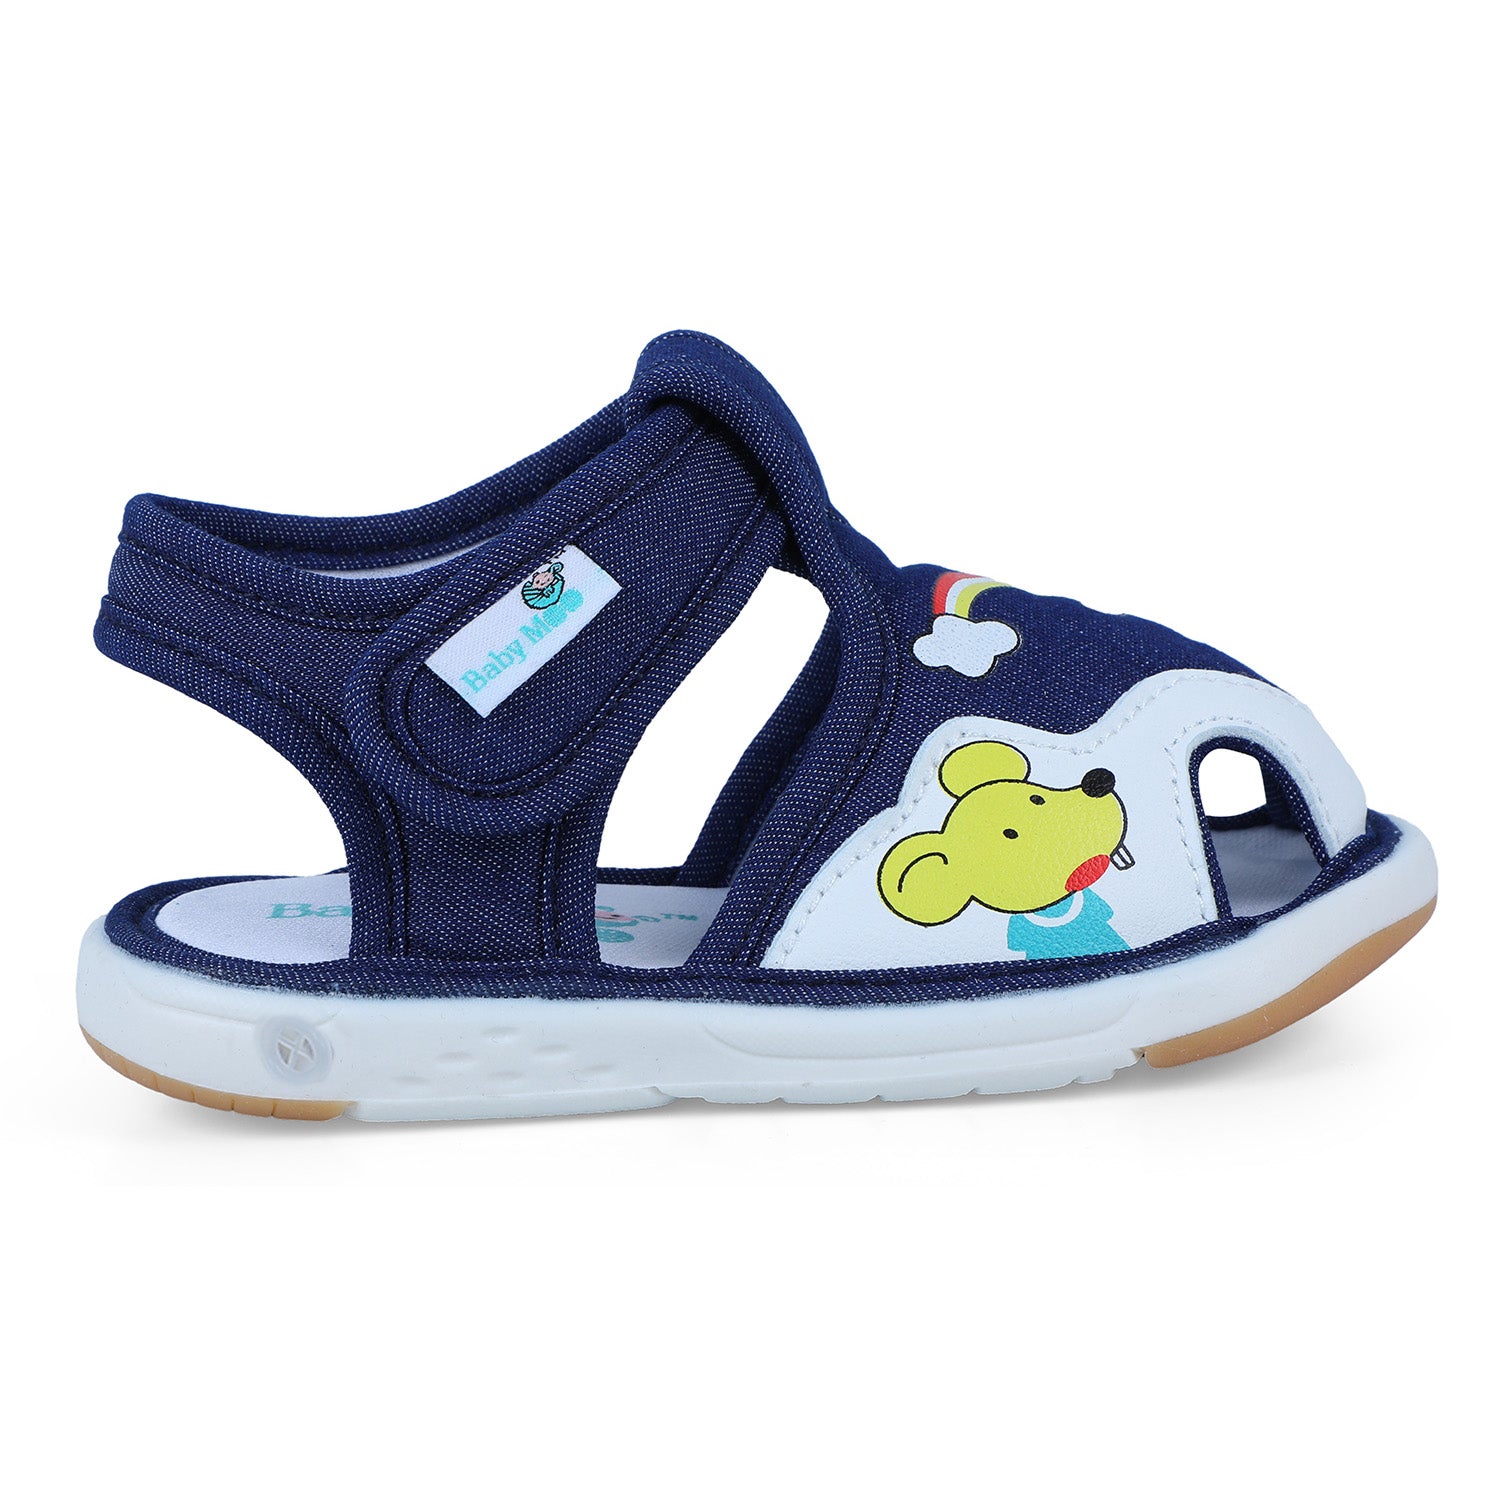 Baby Moo Rainbow Chu-Chu Sound Anti-Skid Breathable Denim Sandals - Navy Blue - Baby Moo